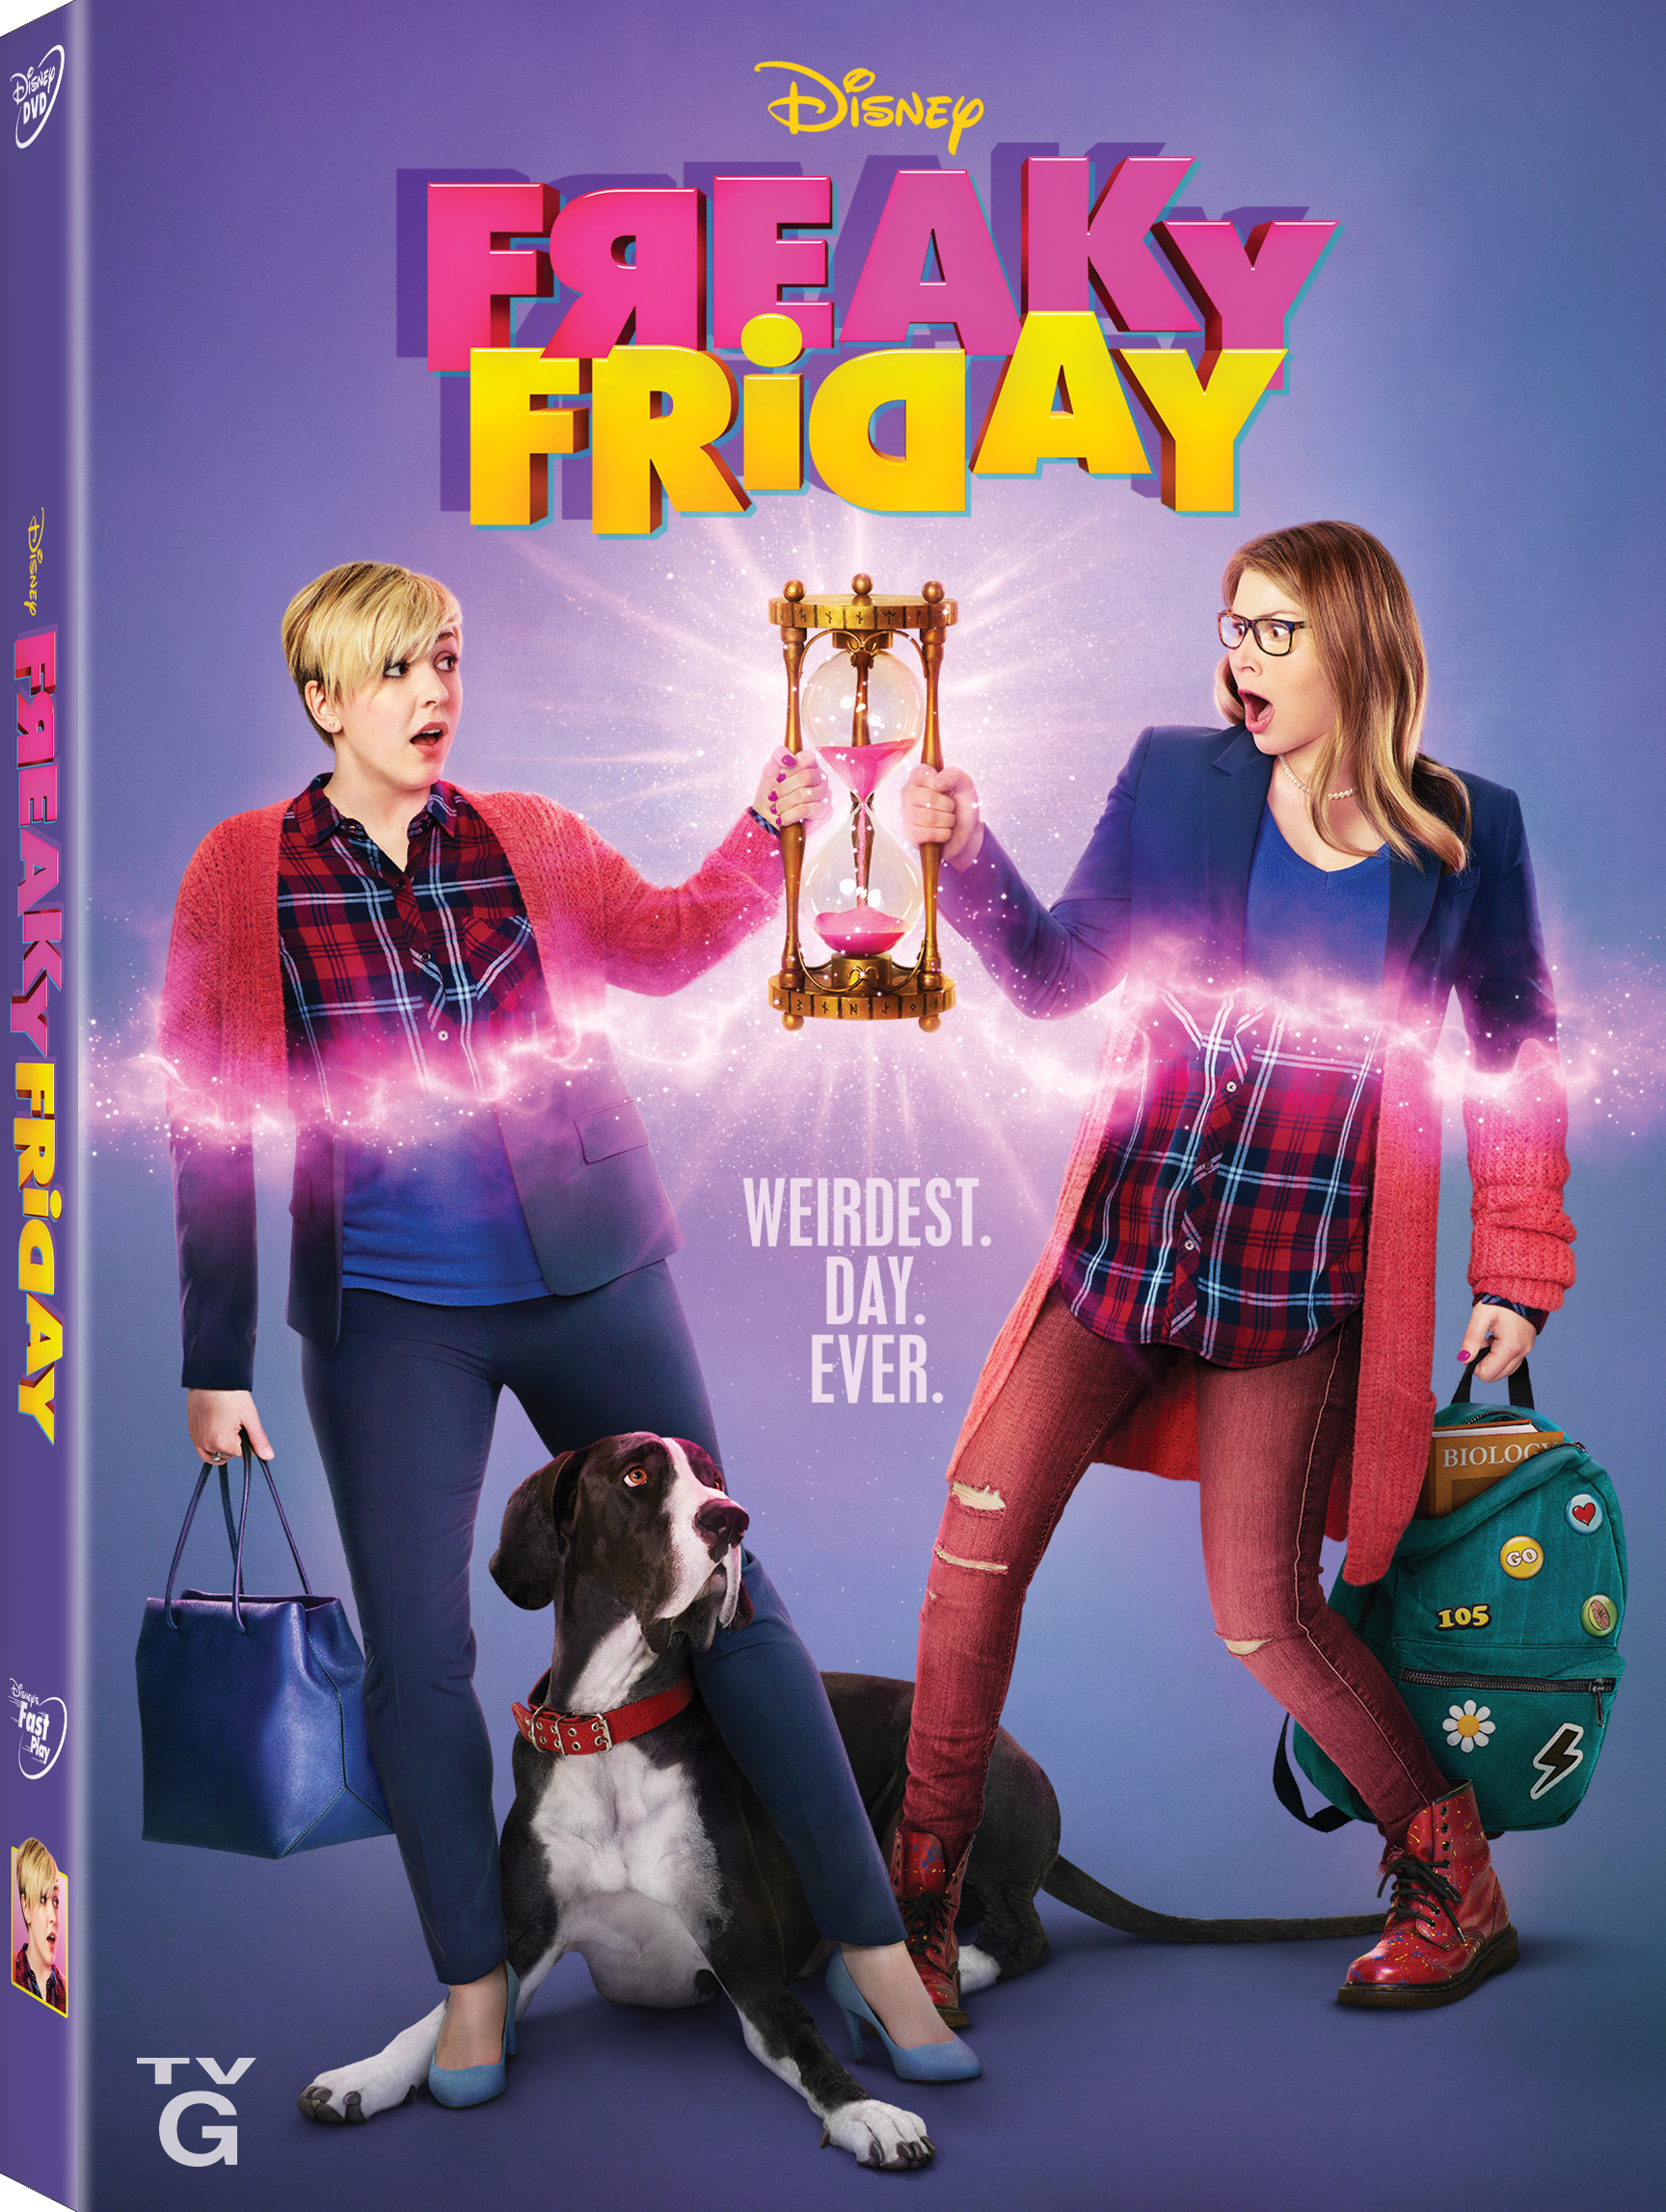 Freaky Friday: A New Musical on Disney DVD September 25th!